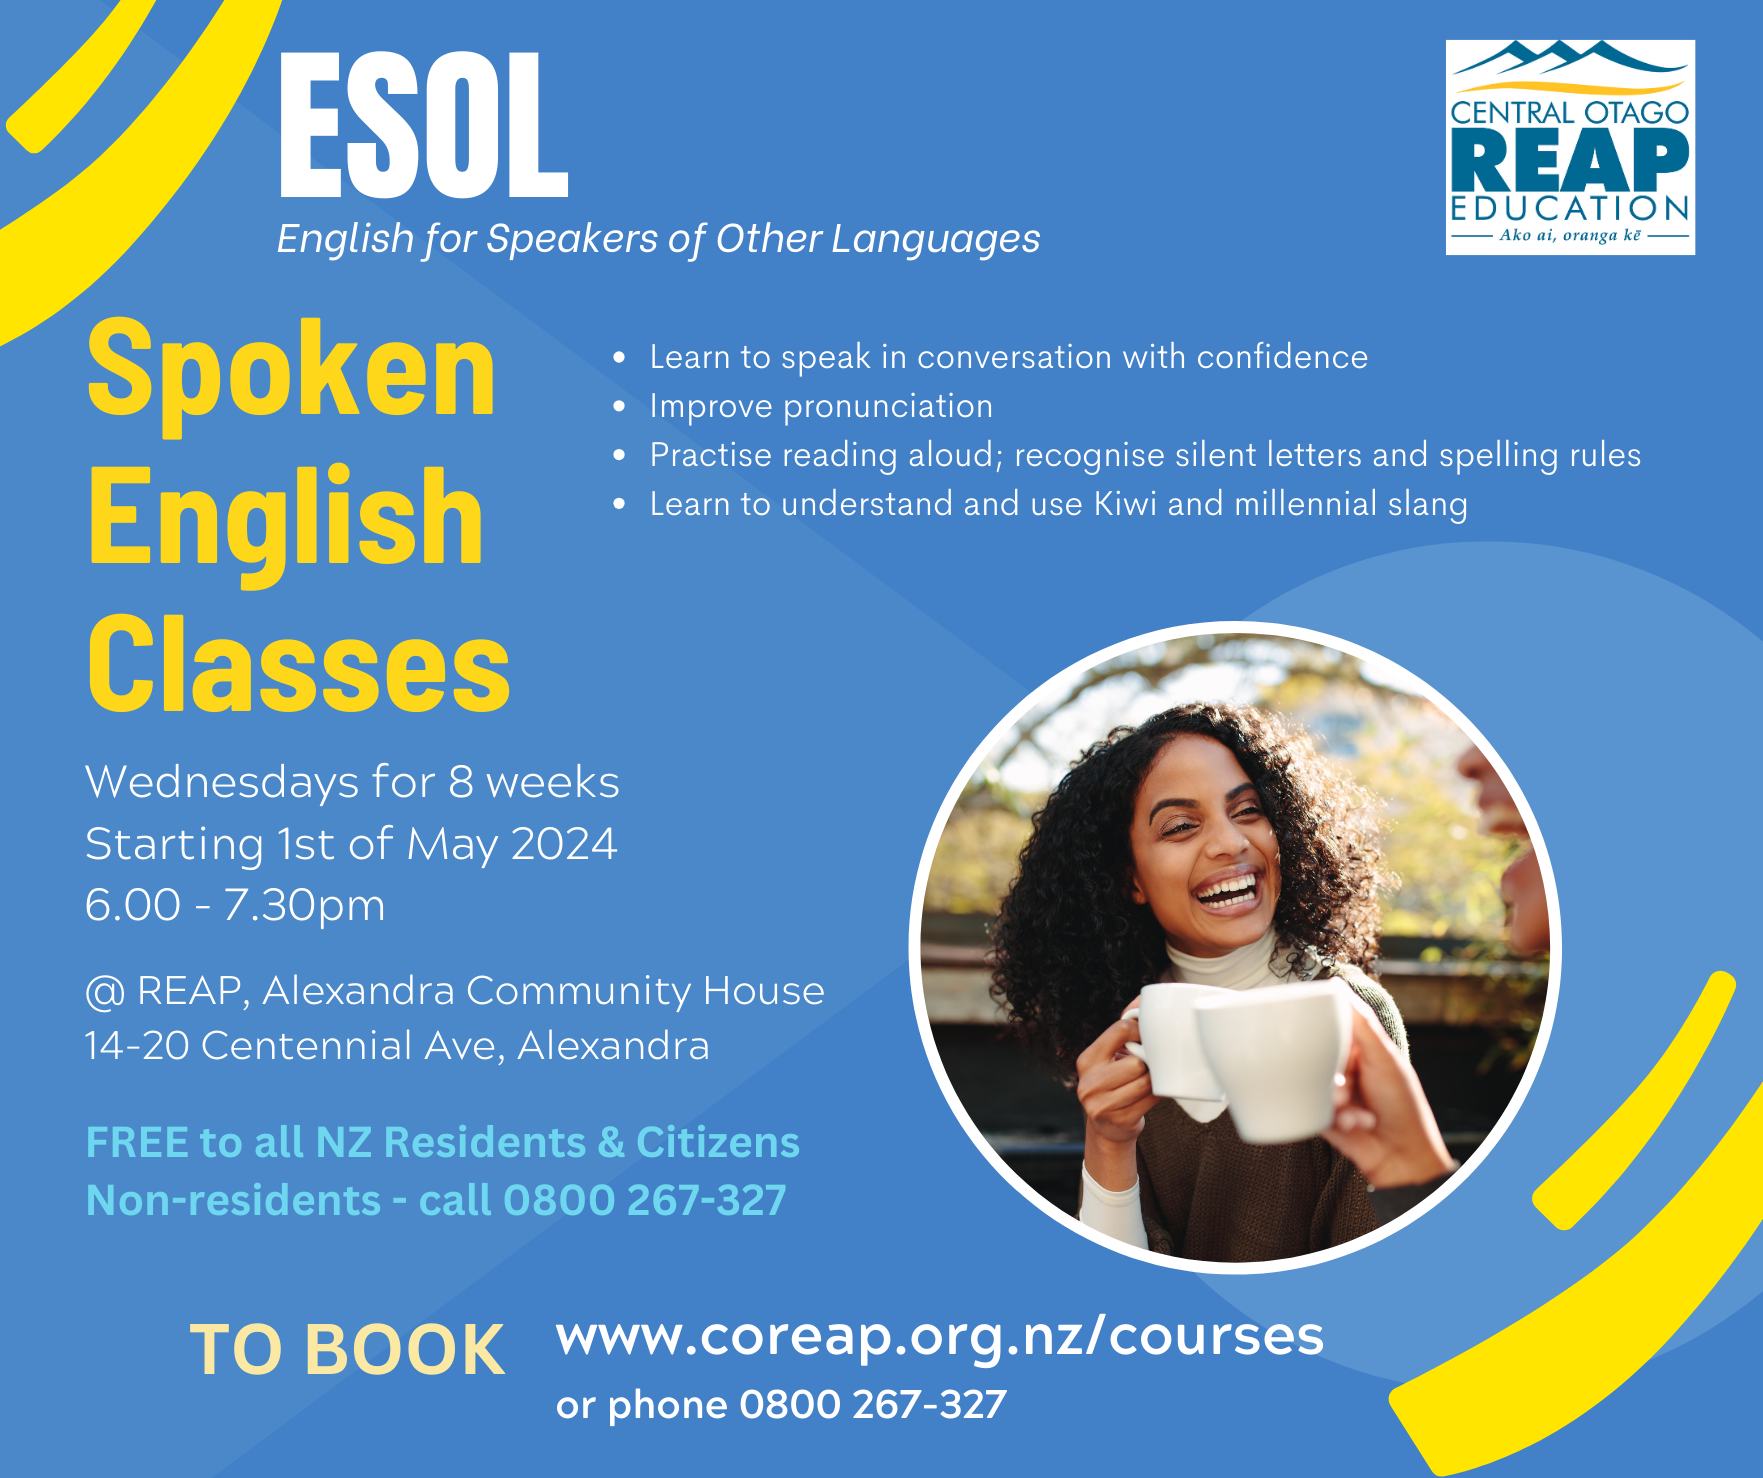 Esol Evening Classes For Spoken English Term 2